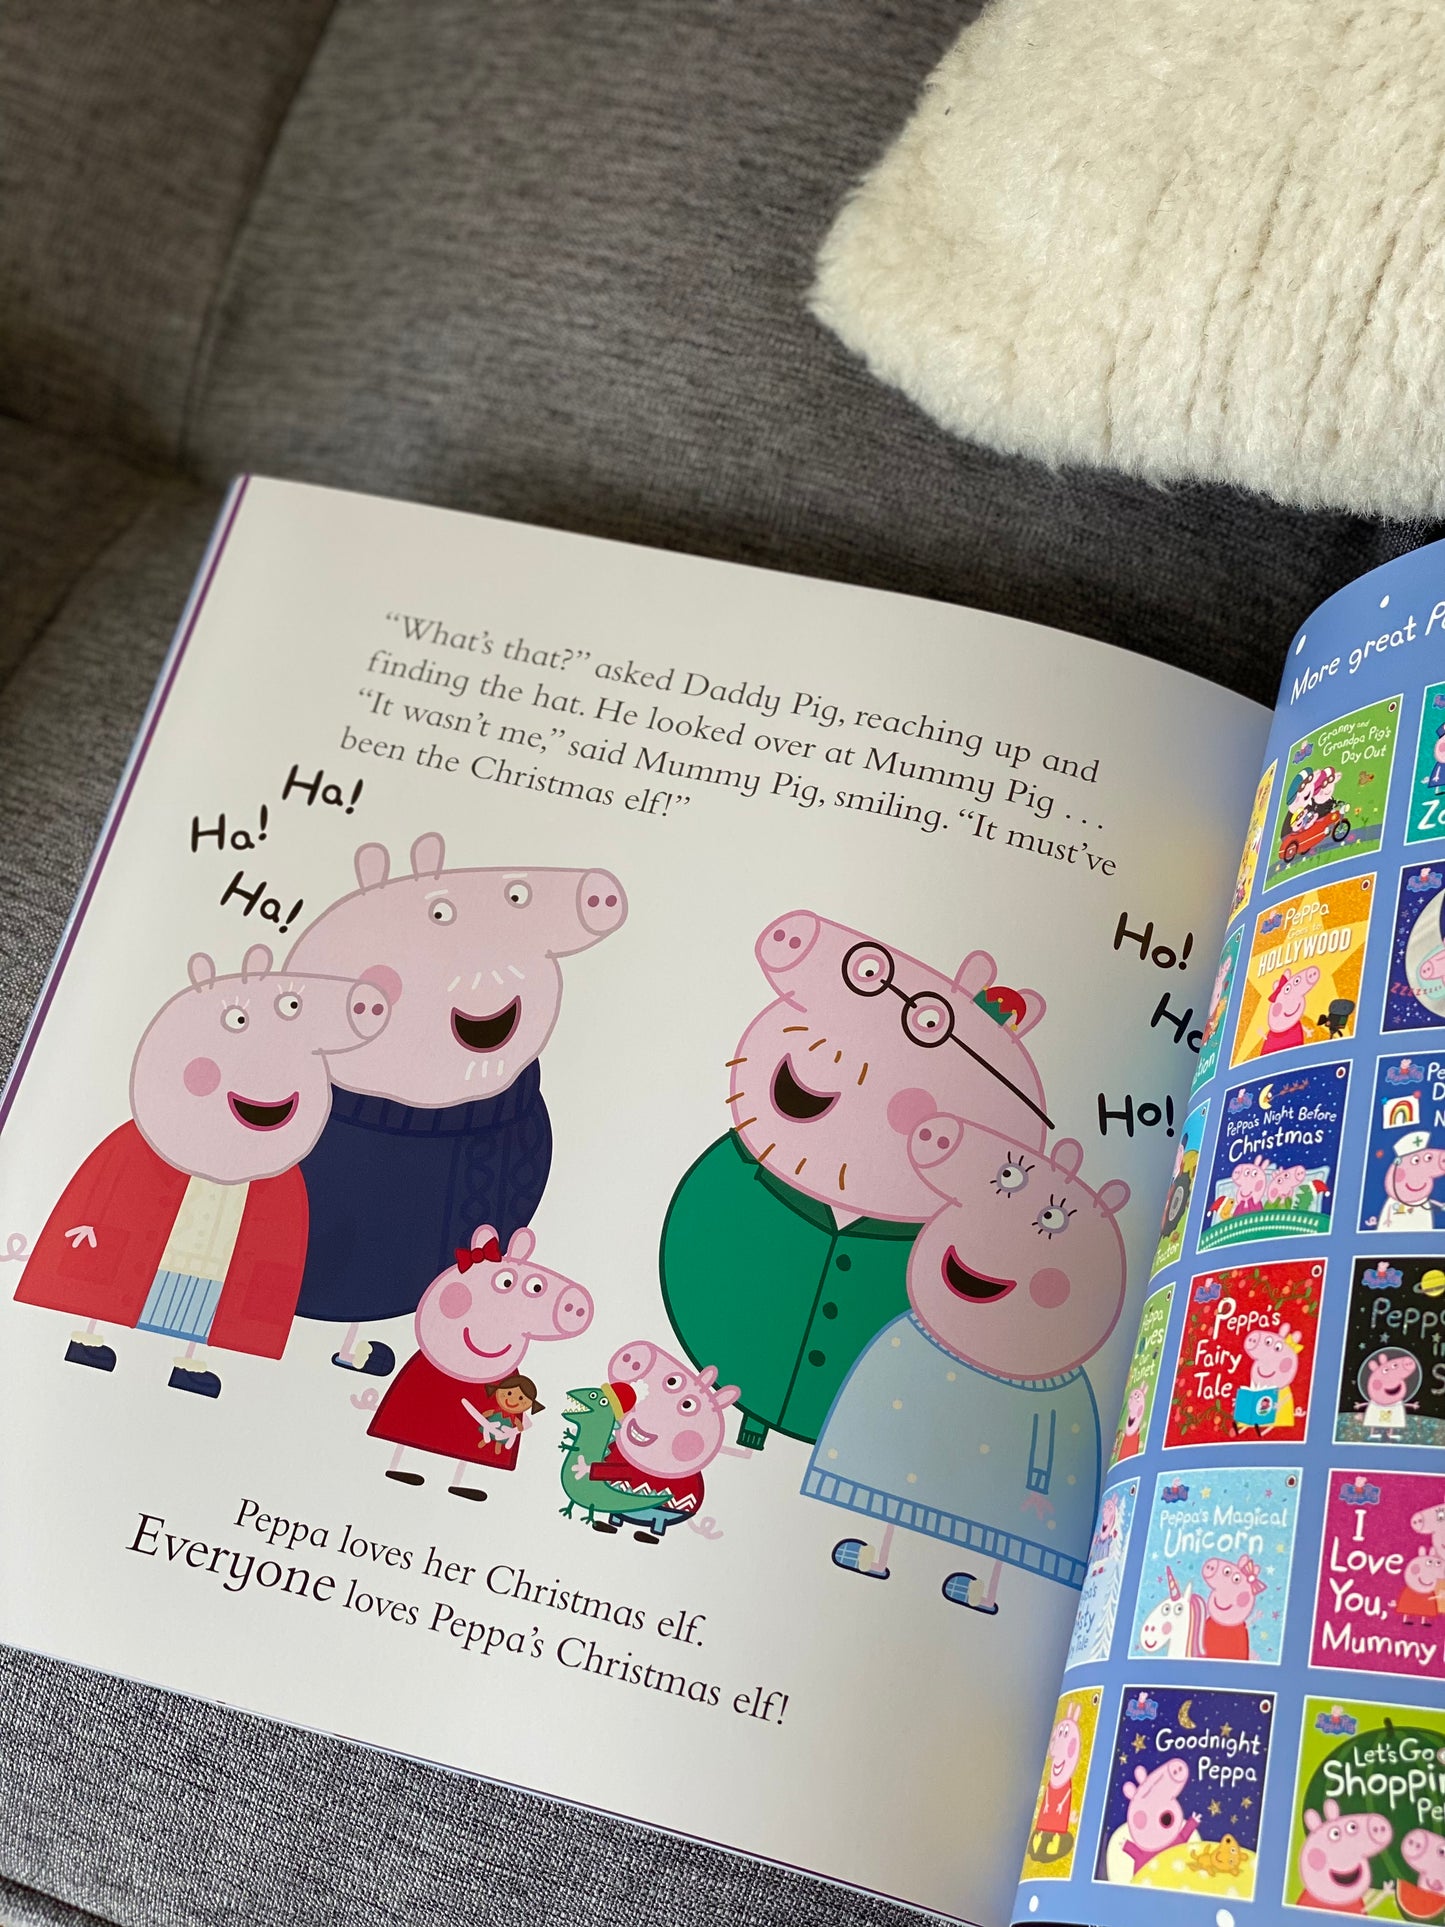 Peppa Pig: Peppa and the Christmas Elf [Book]